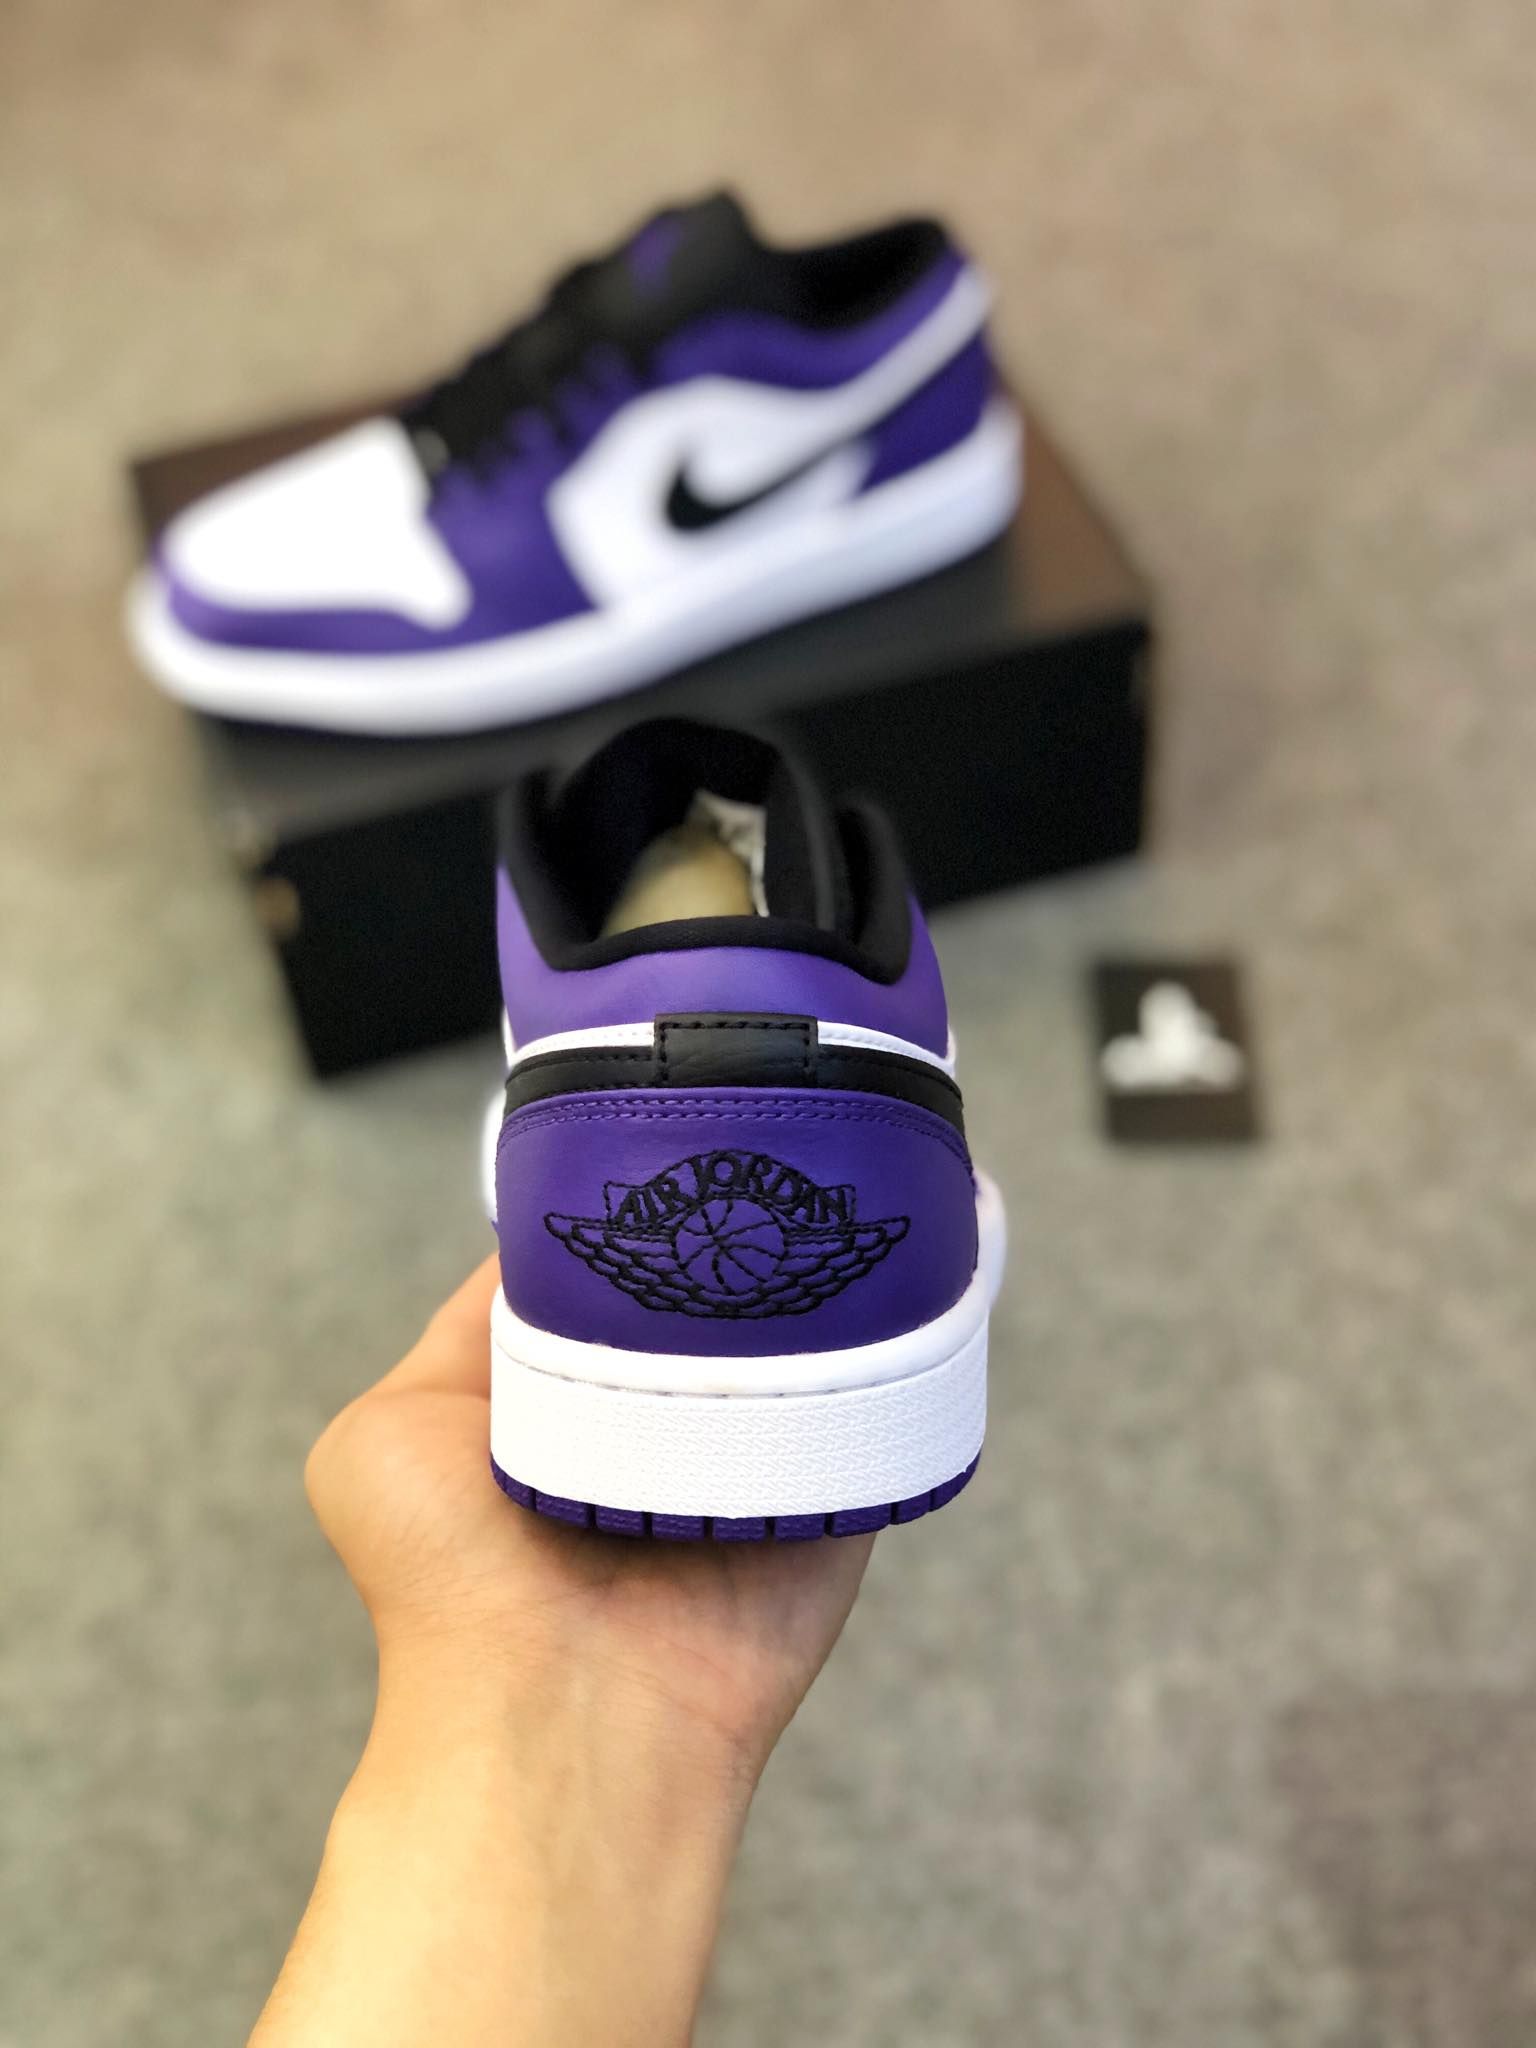  553558-500 Jordan 1 Low Court Purple 